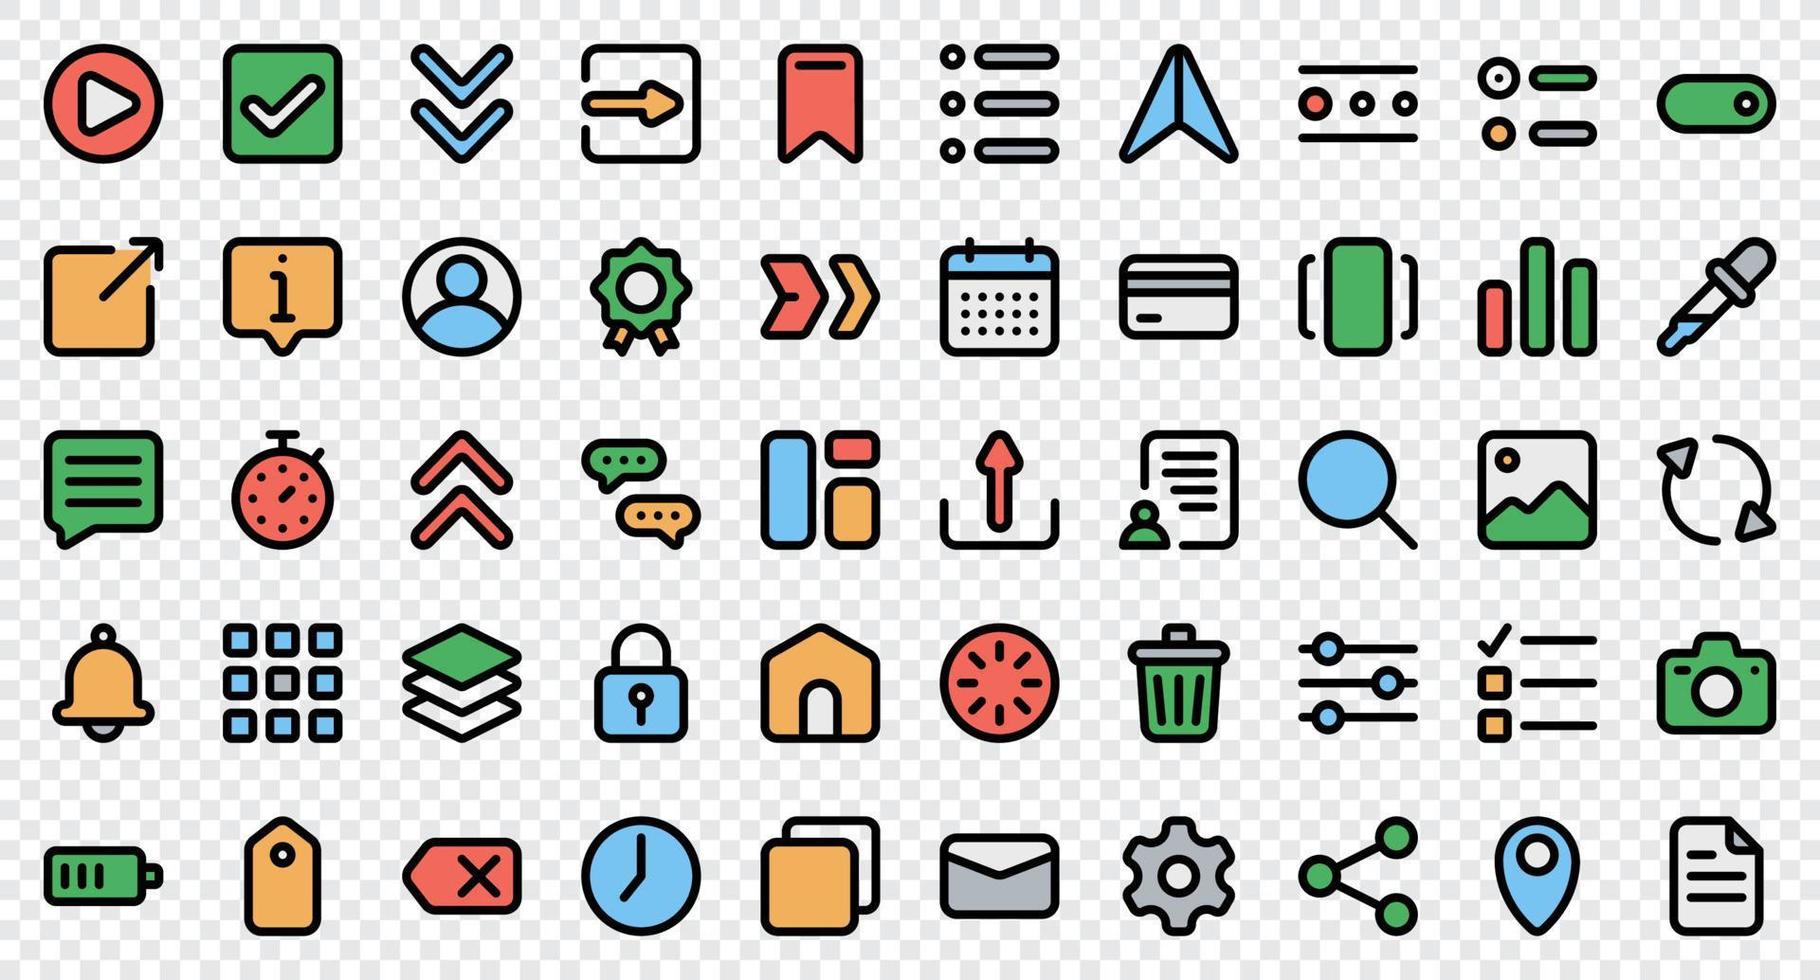 Basic user interface essential set. Filled icon set. User interface symbols. Vector illustration